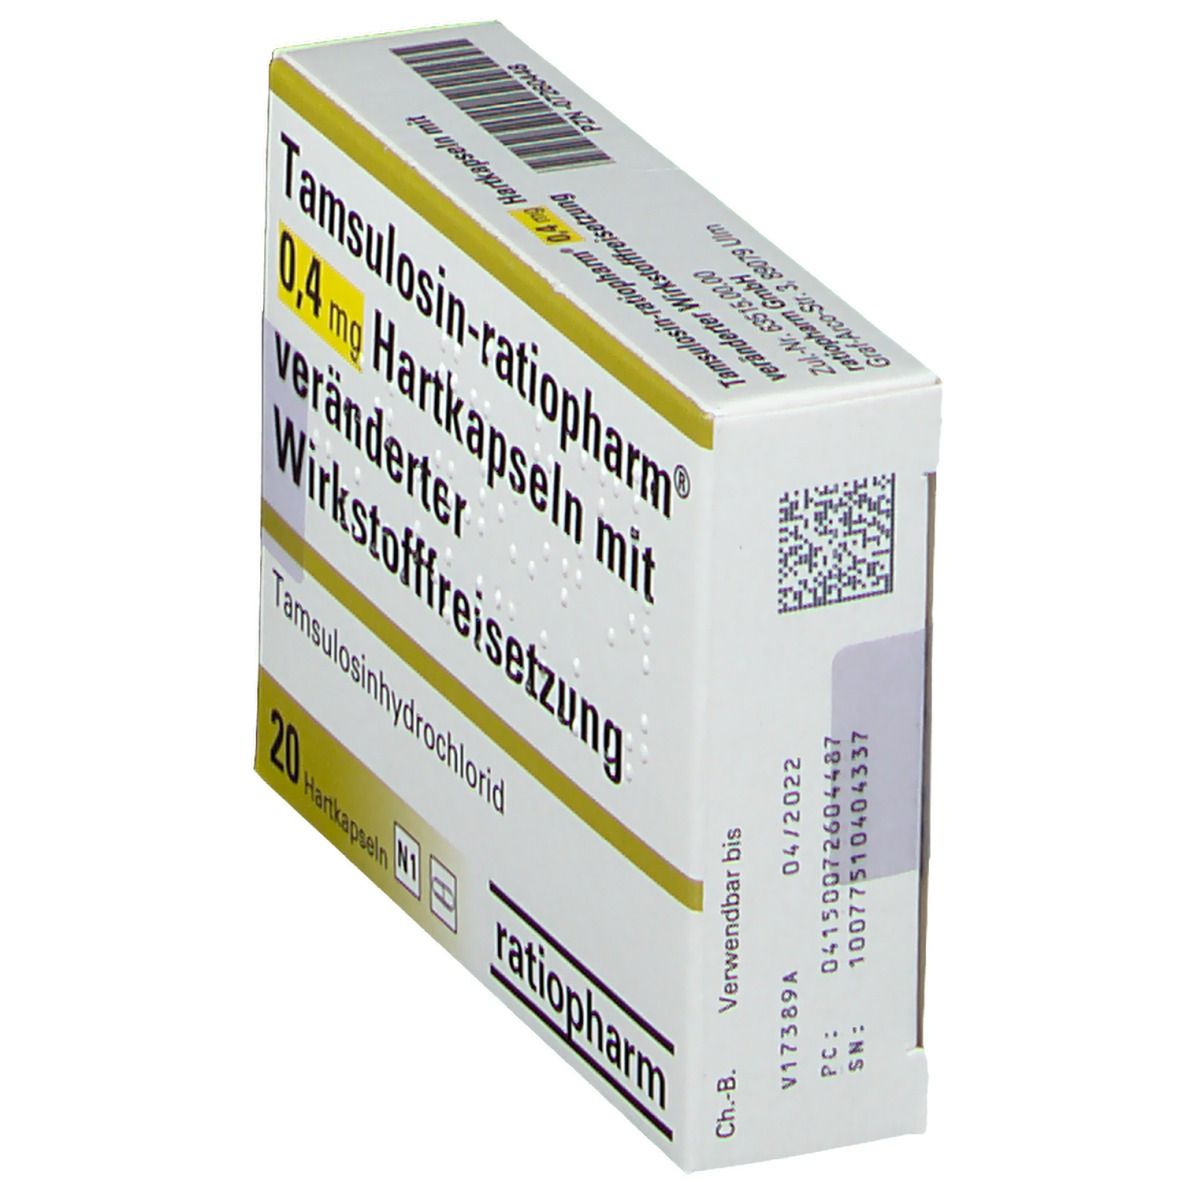 Tamsulosin-ratiopharm® 0,4 mg